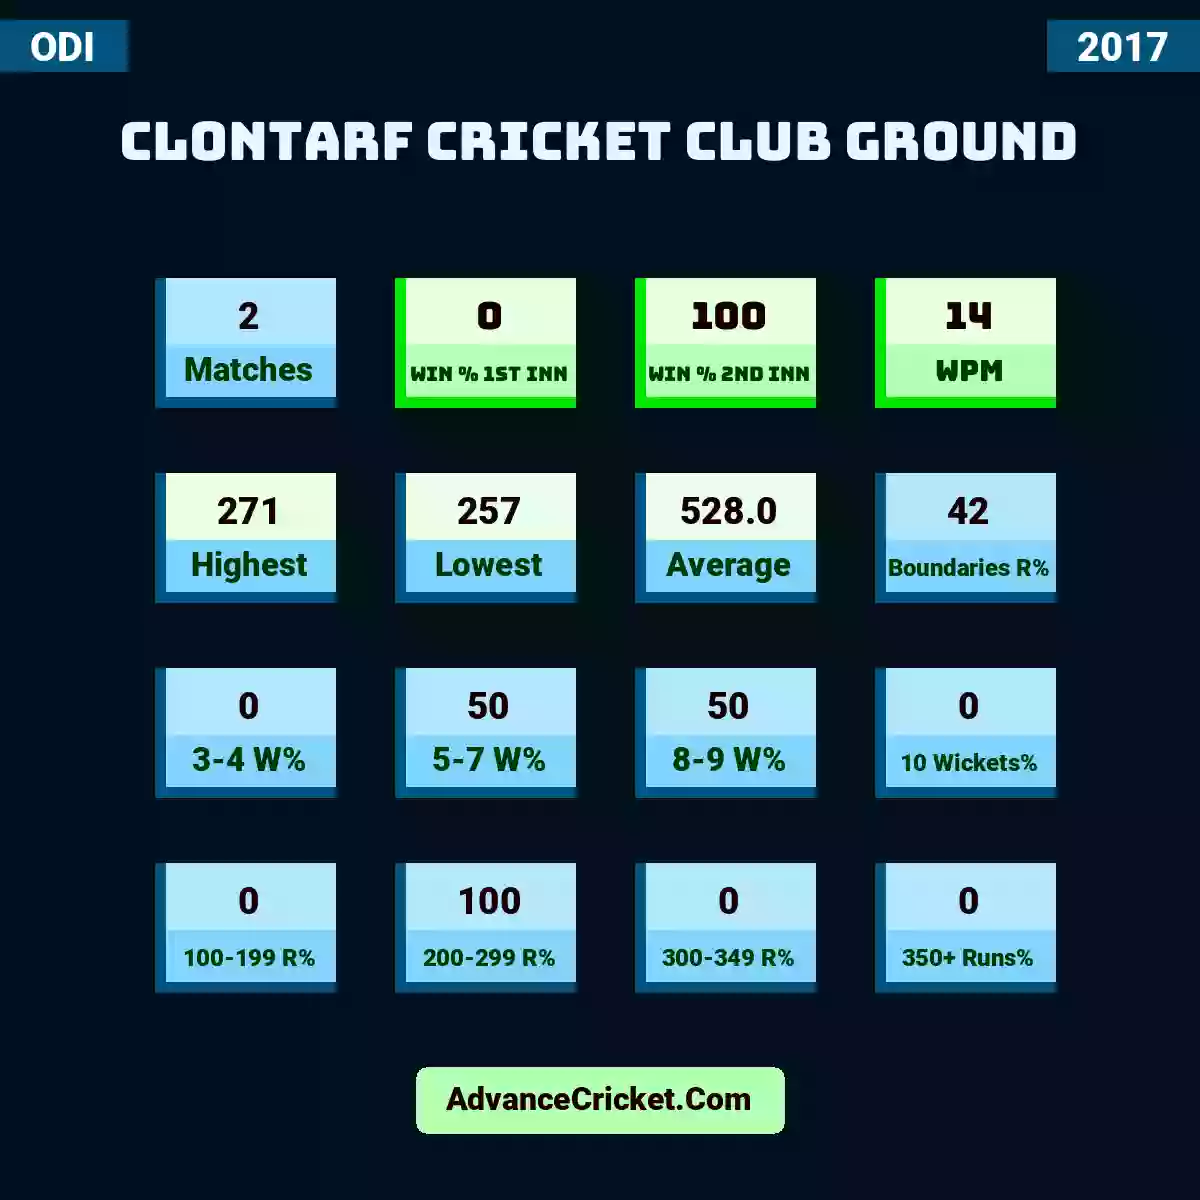 Image showing Clontarf Cricket Club Ground with Matches: 2, Win % 1st Inn: 0, Win % 2nd Inn: 100, WPM: 14, Highest: 271, Lowest: 257, Average: 528.0, Boundaries R%: 42, 3-4 W%: 0, 5-7 W%: 50, 8-9 W%: 50, 10 Wickets%: 0, 100-199 R%: 0, 200-299 R%: 100, 300-349 R%: 0, 350+ Runs%: 0.